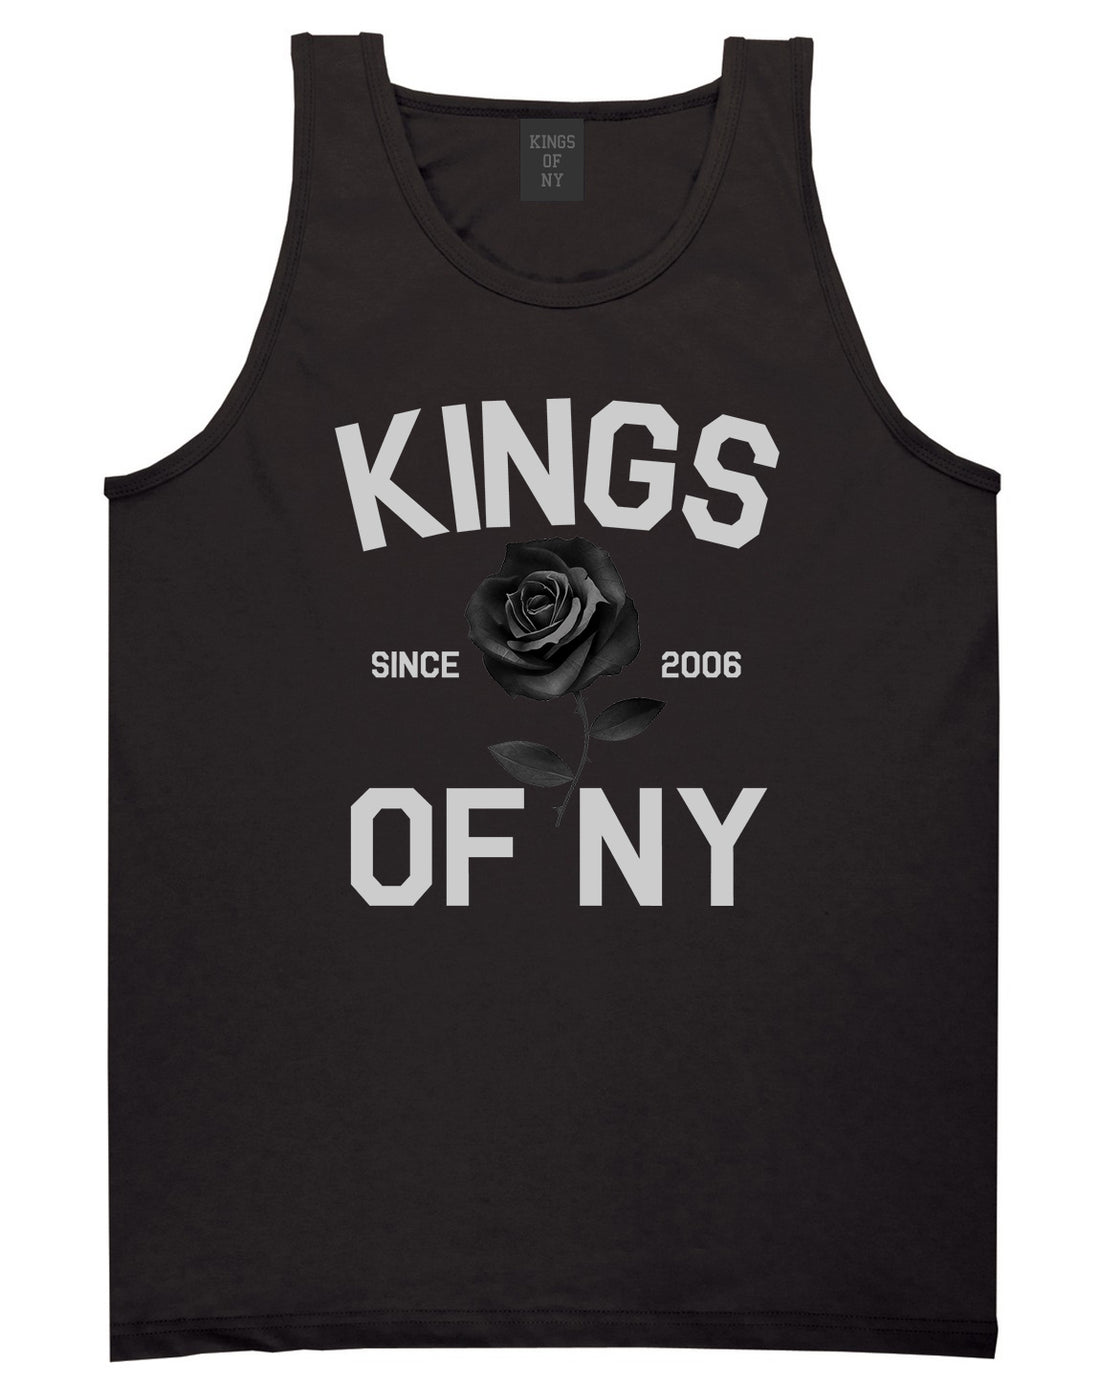 Black Rose Since 2006 Mens Tank Top Shirt Black by Kings Of NY